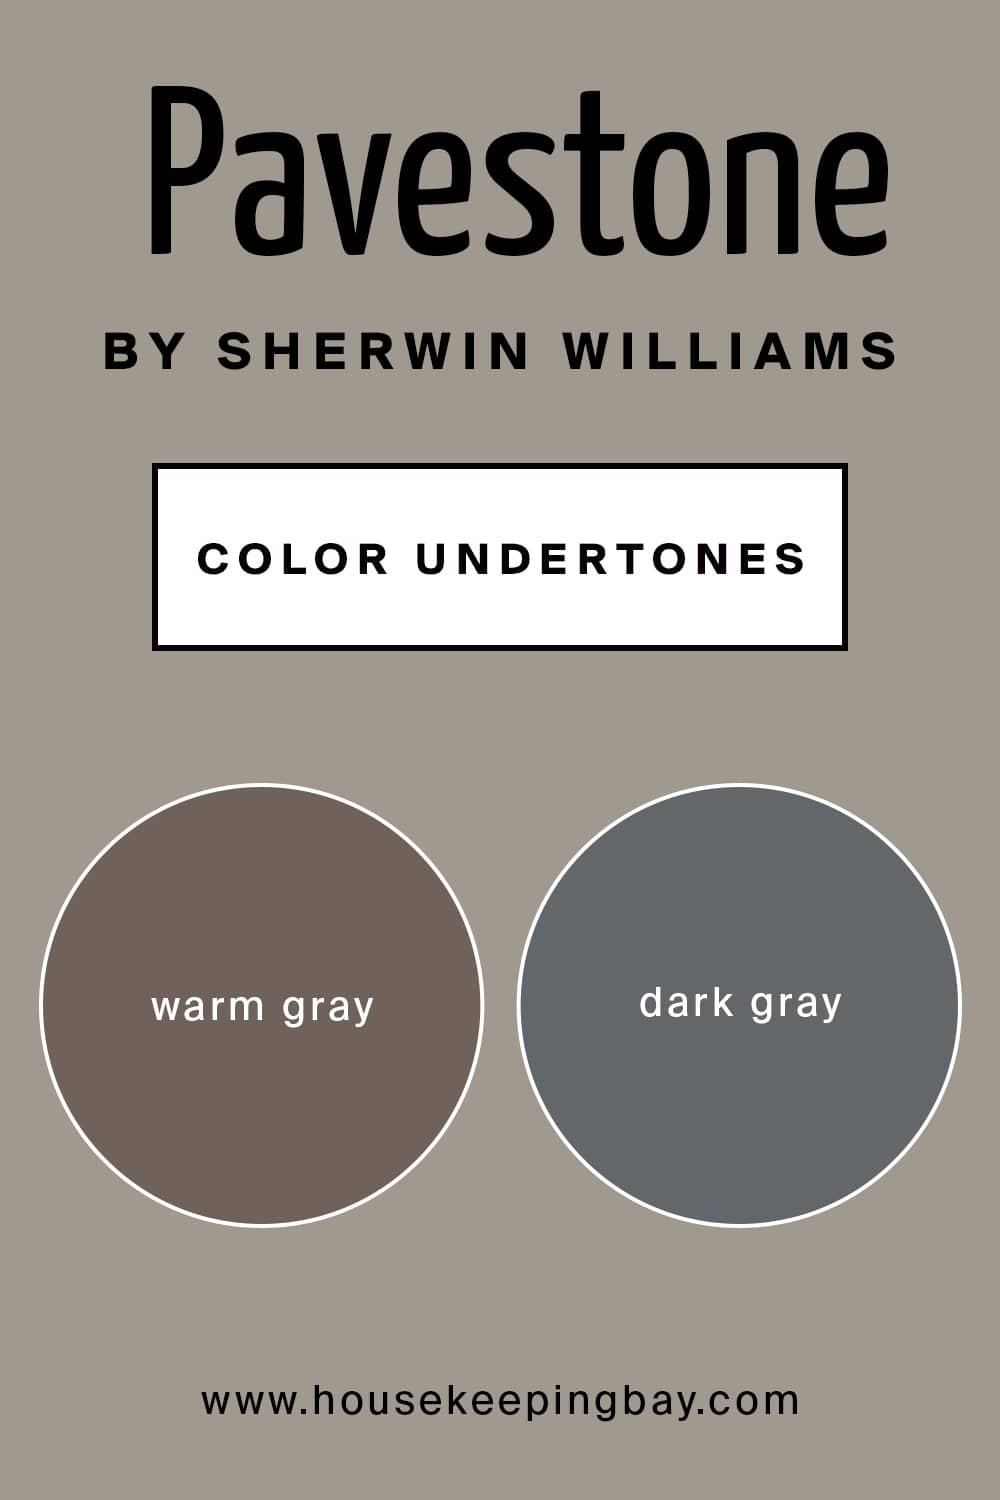 Pavestone by Sherwin Williams Color Undertones